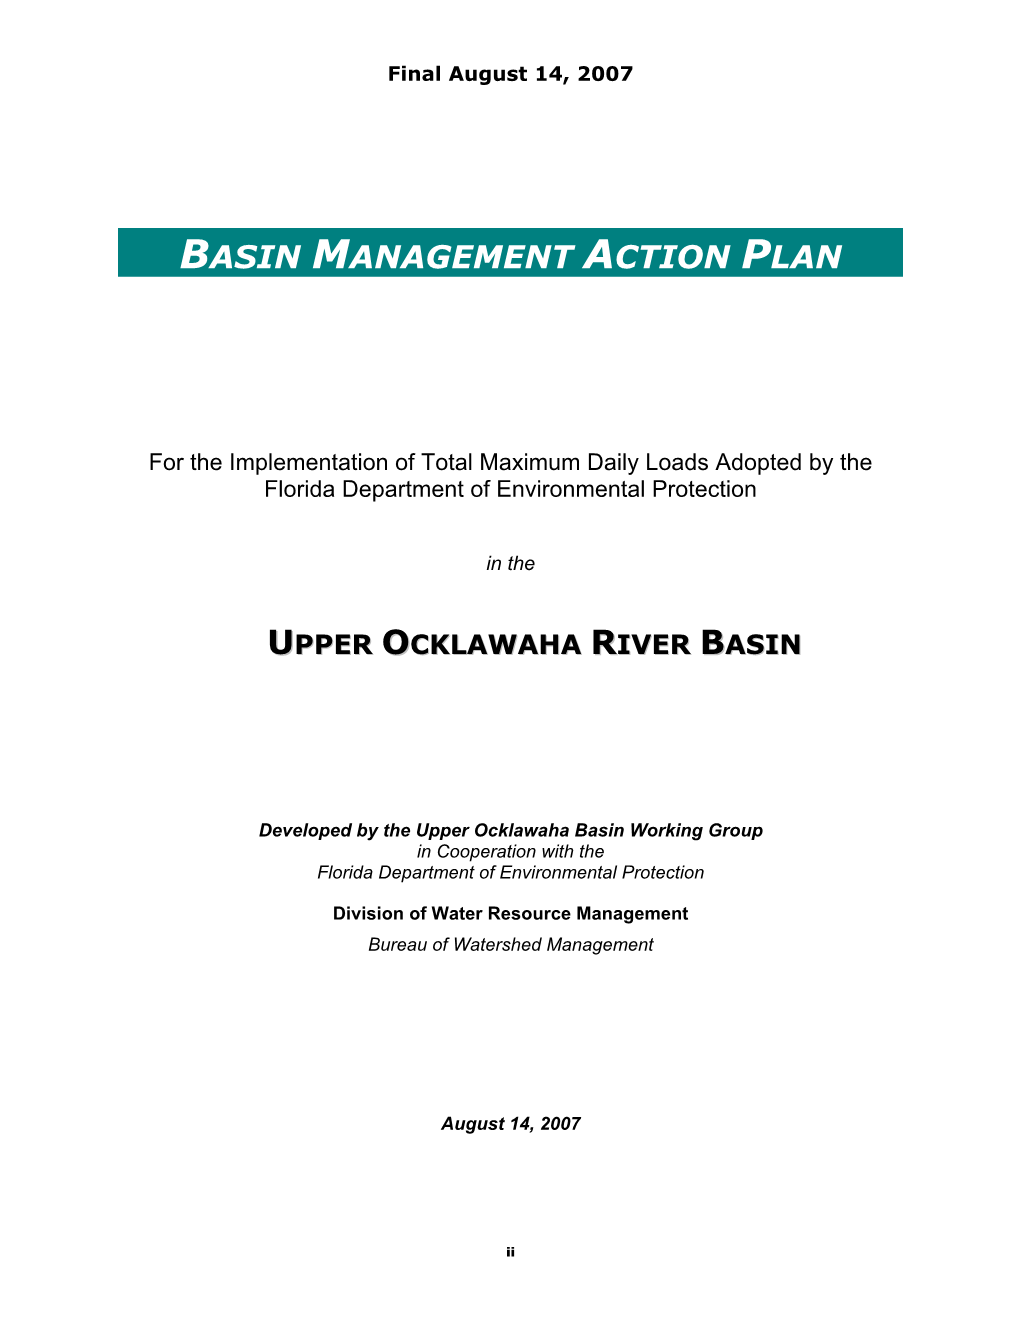 Basin Management Action Plan